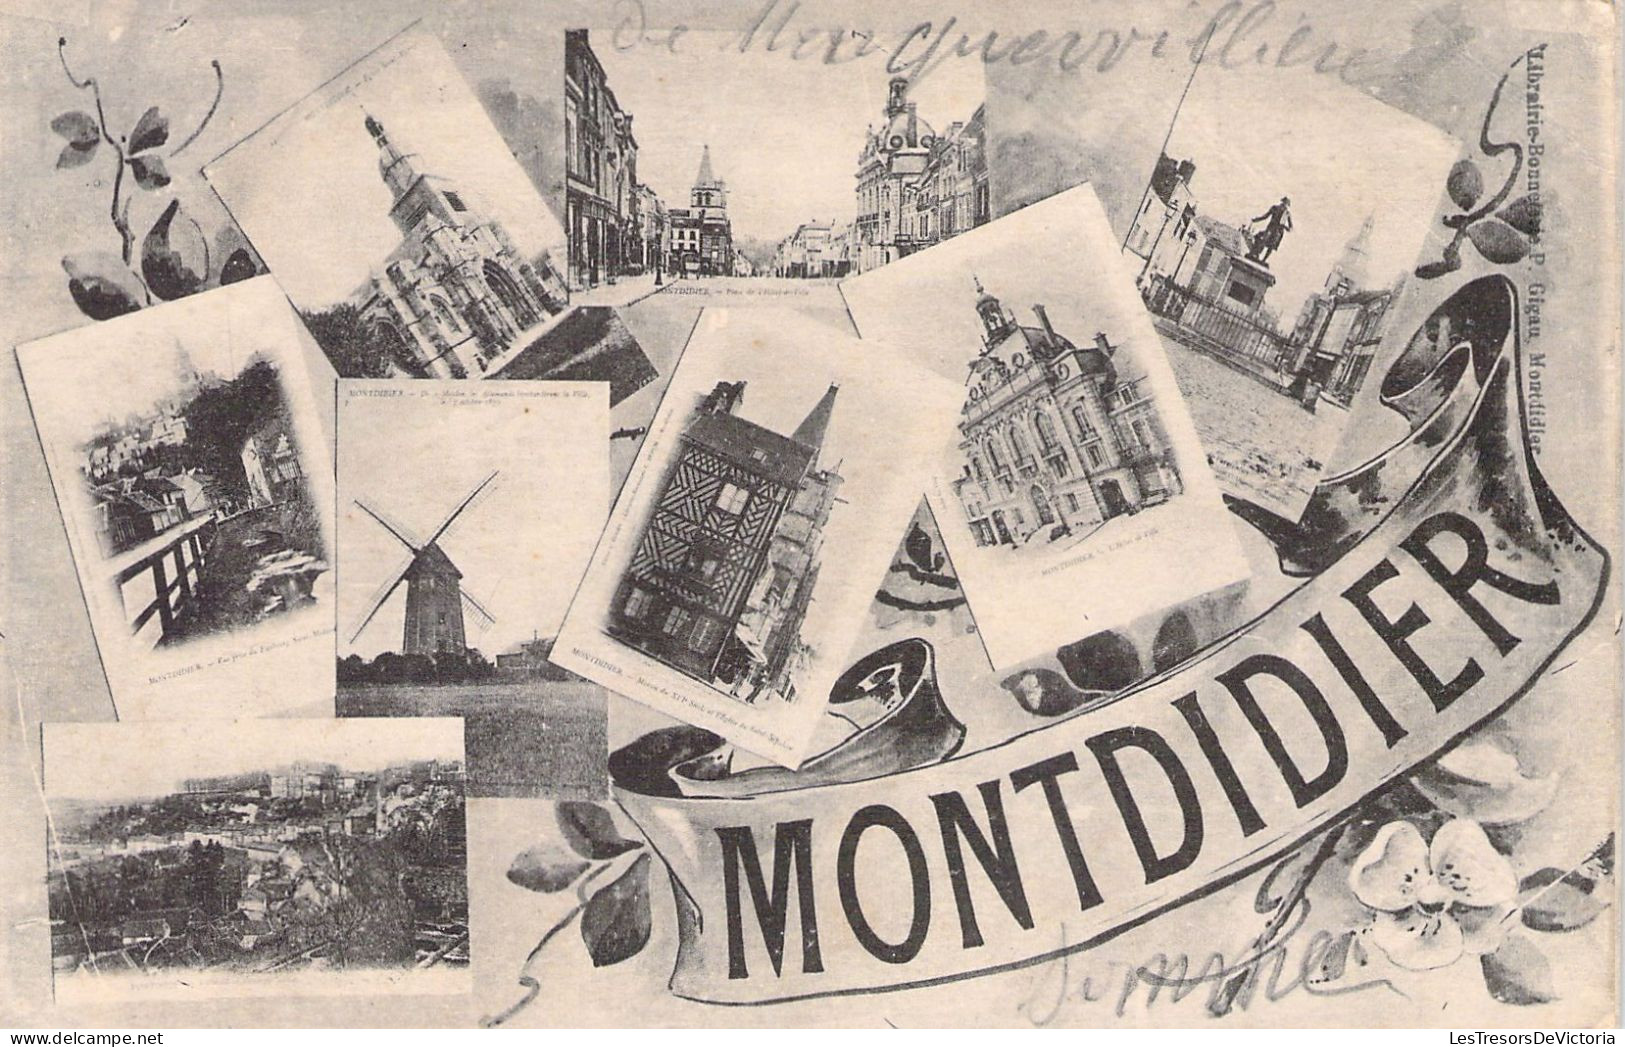 FRANCE - 80 - MONTDIDIER - Multi Vues - Carte Postale Ancienne - Montdidier